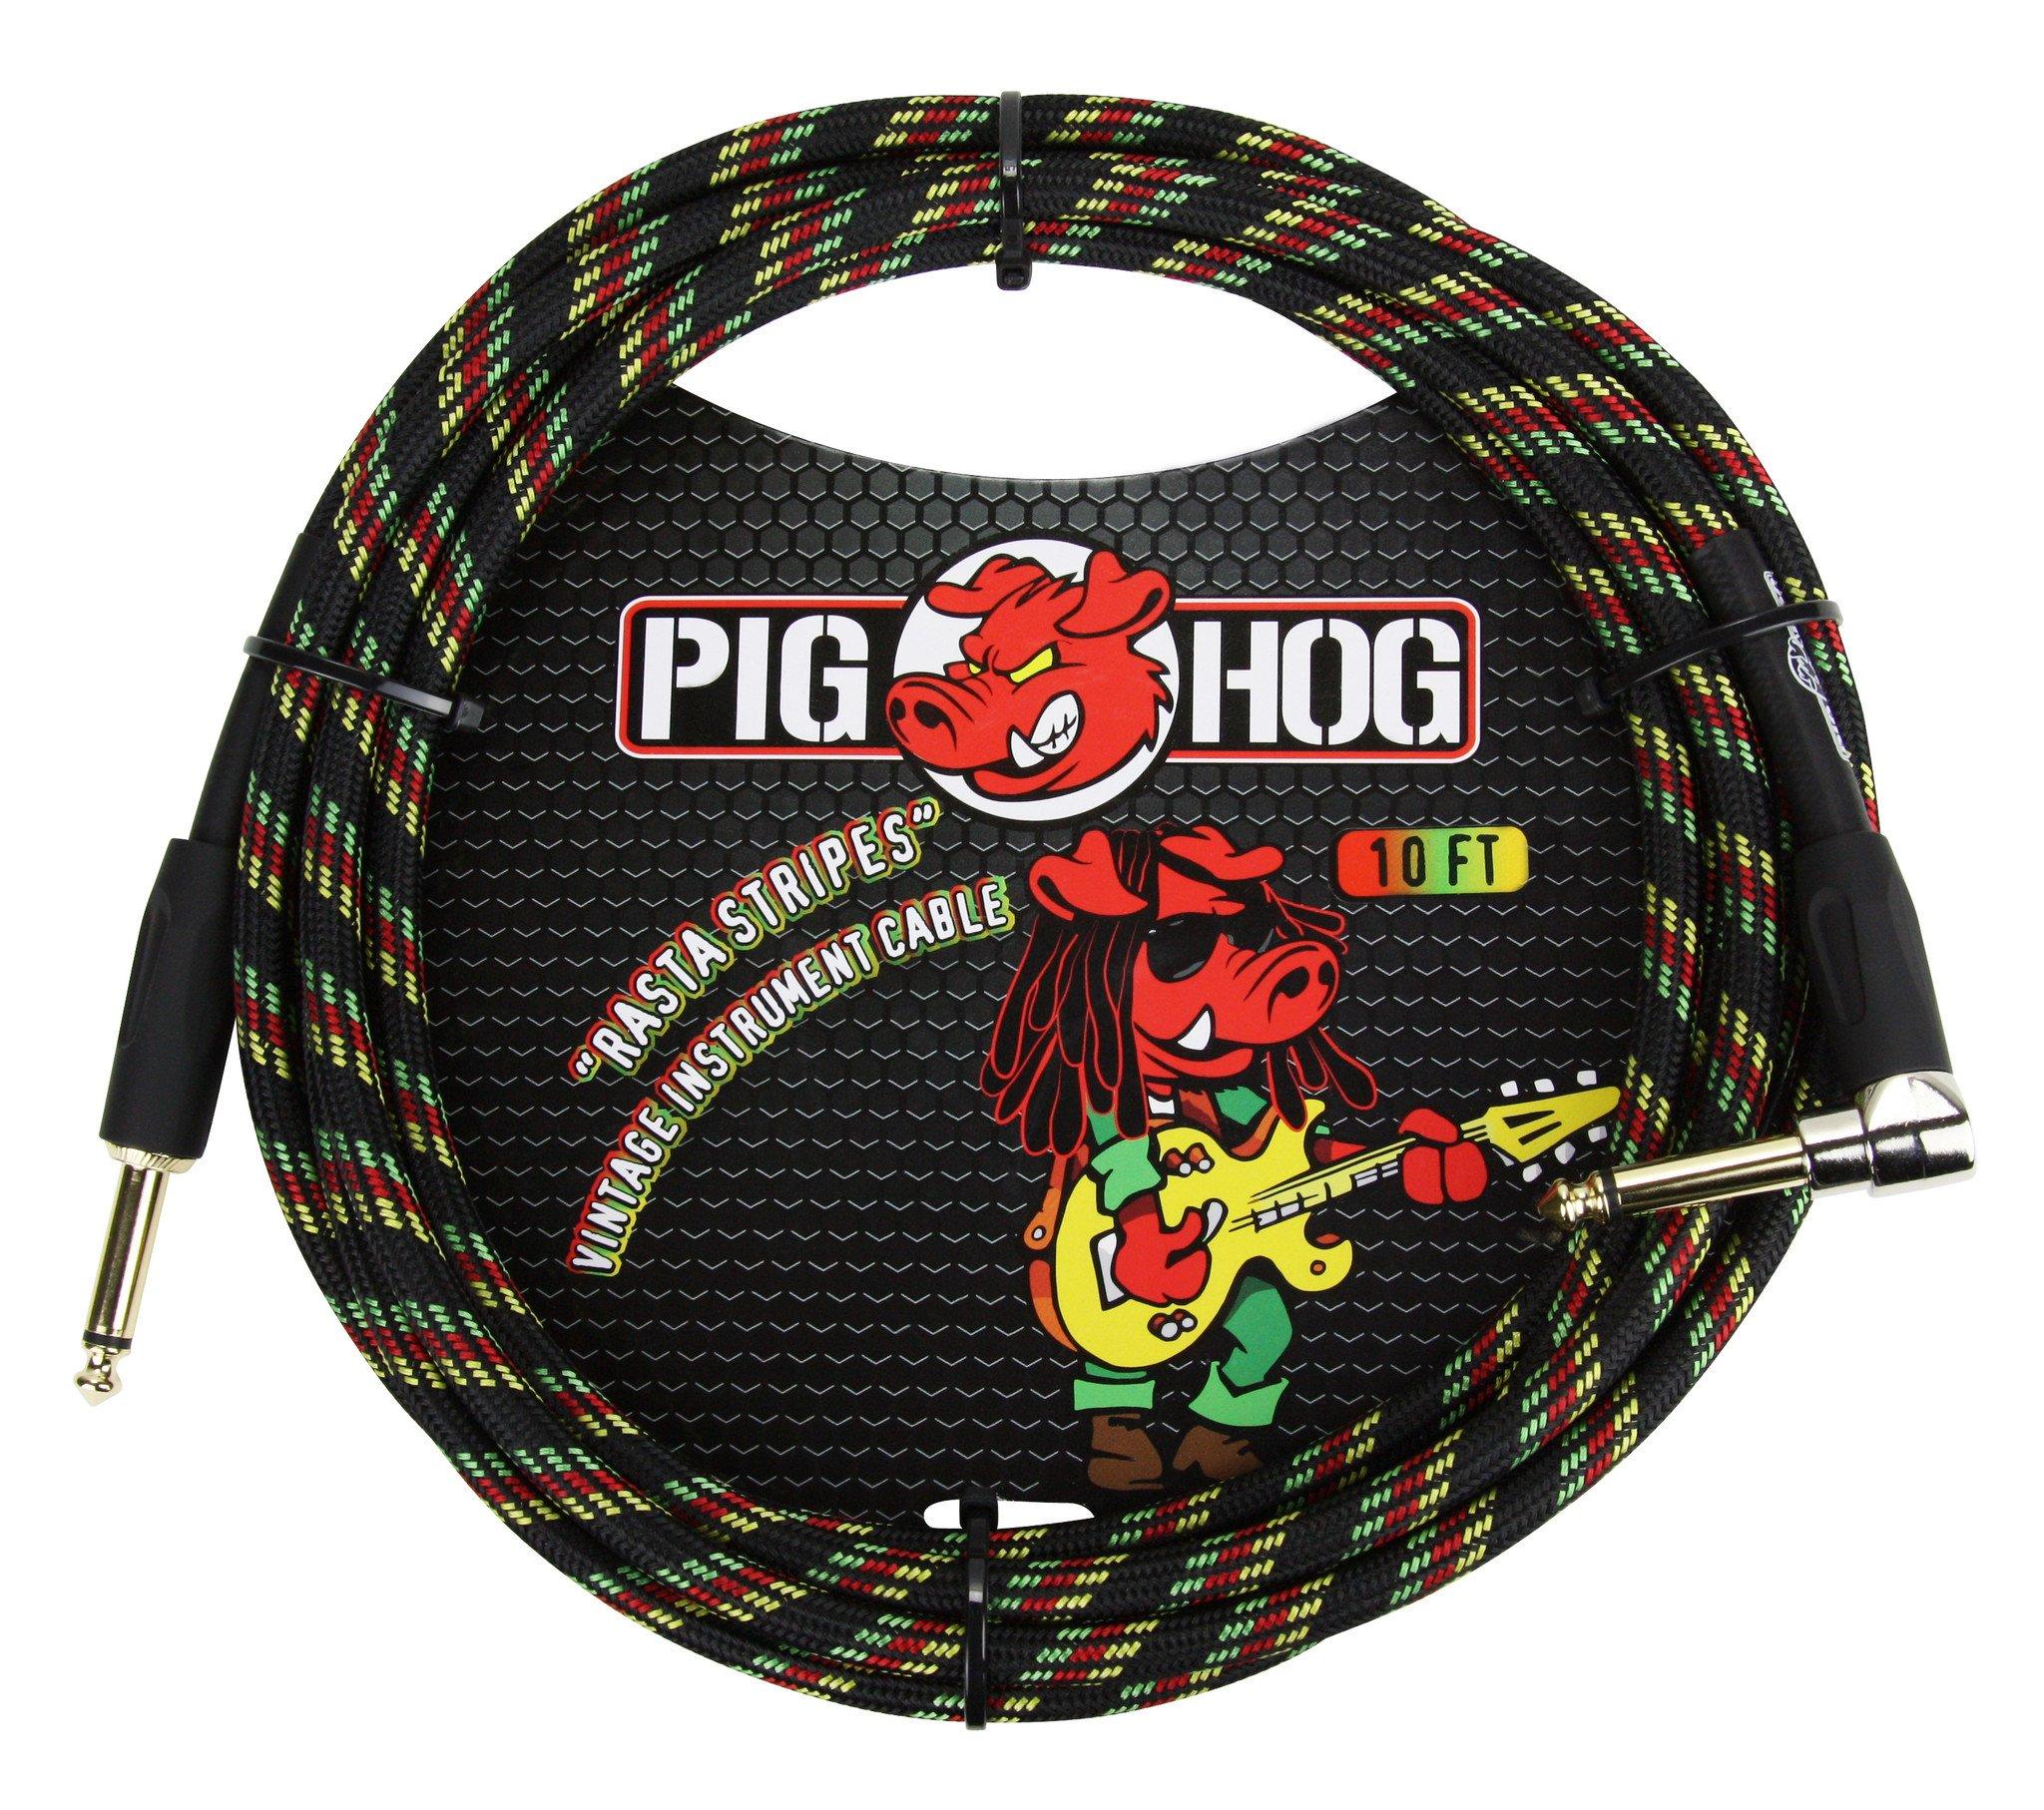 Pig Hog "Rasta Stripes" Instrument Cable, 20ft Right Angle